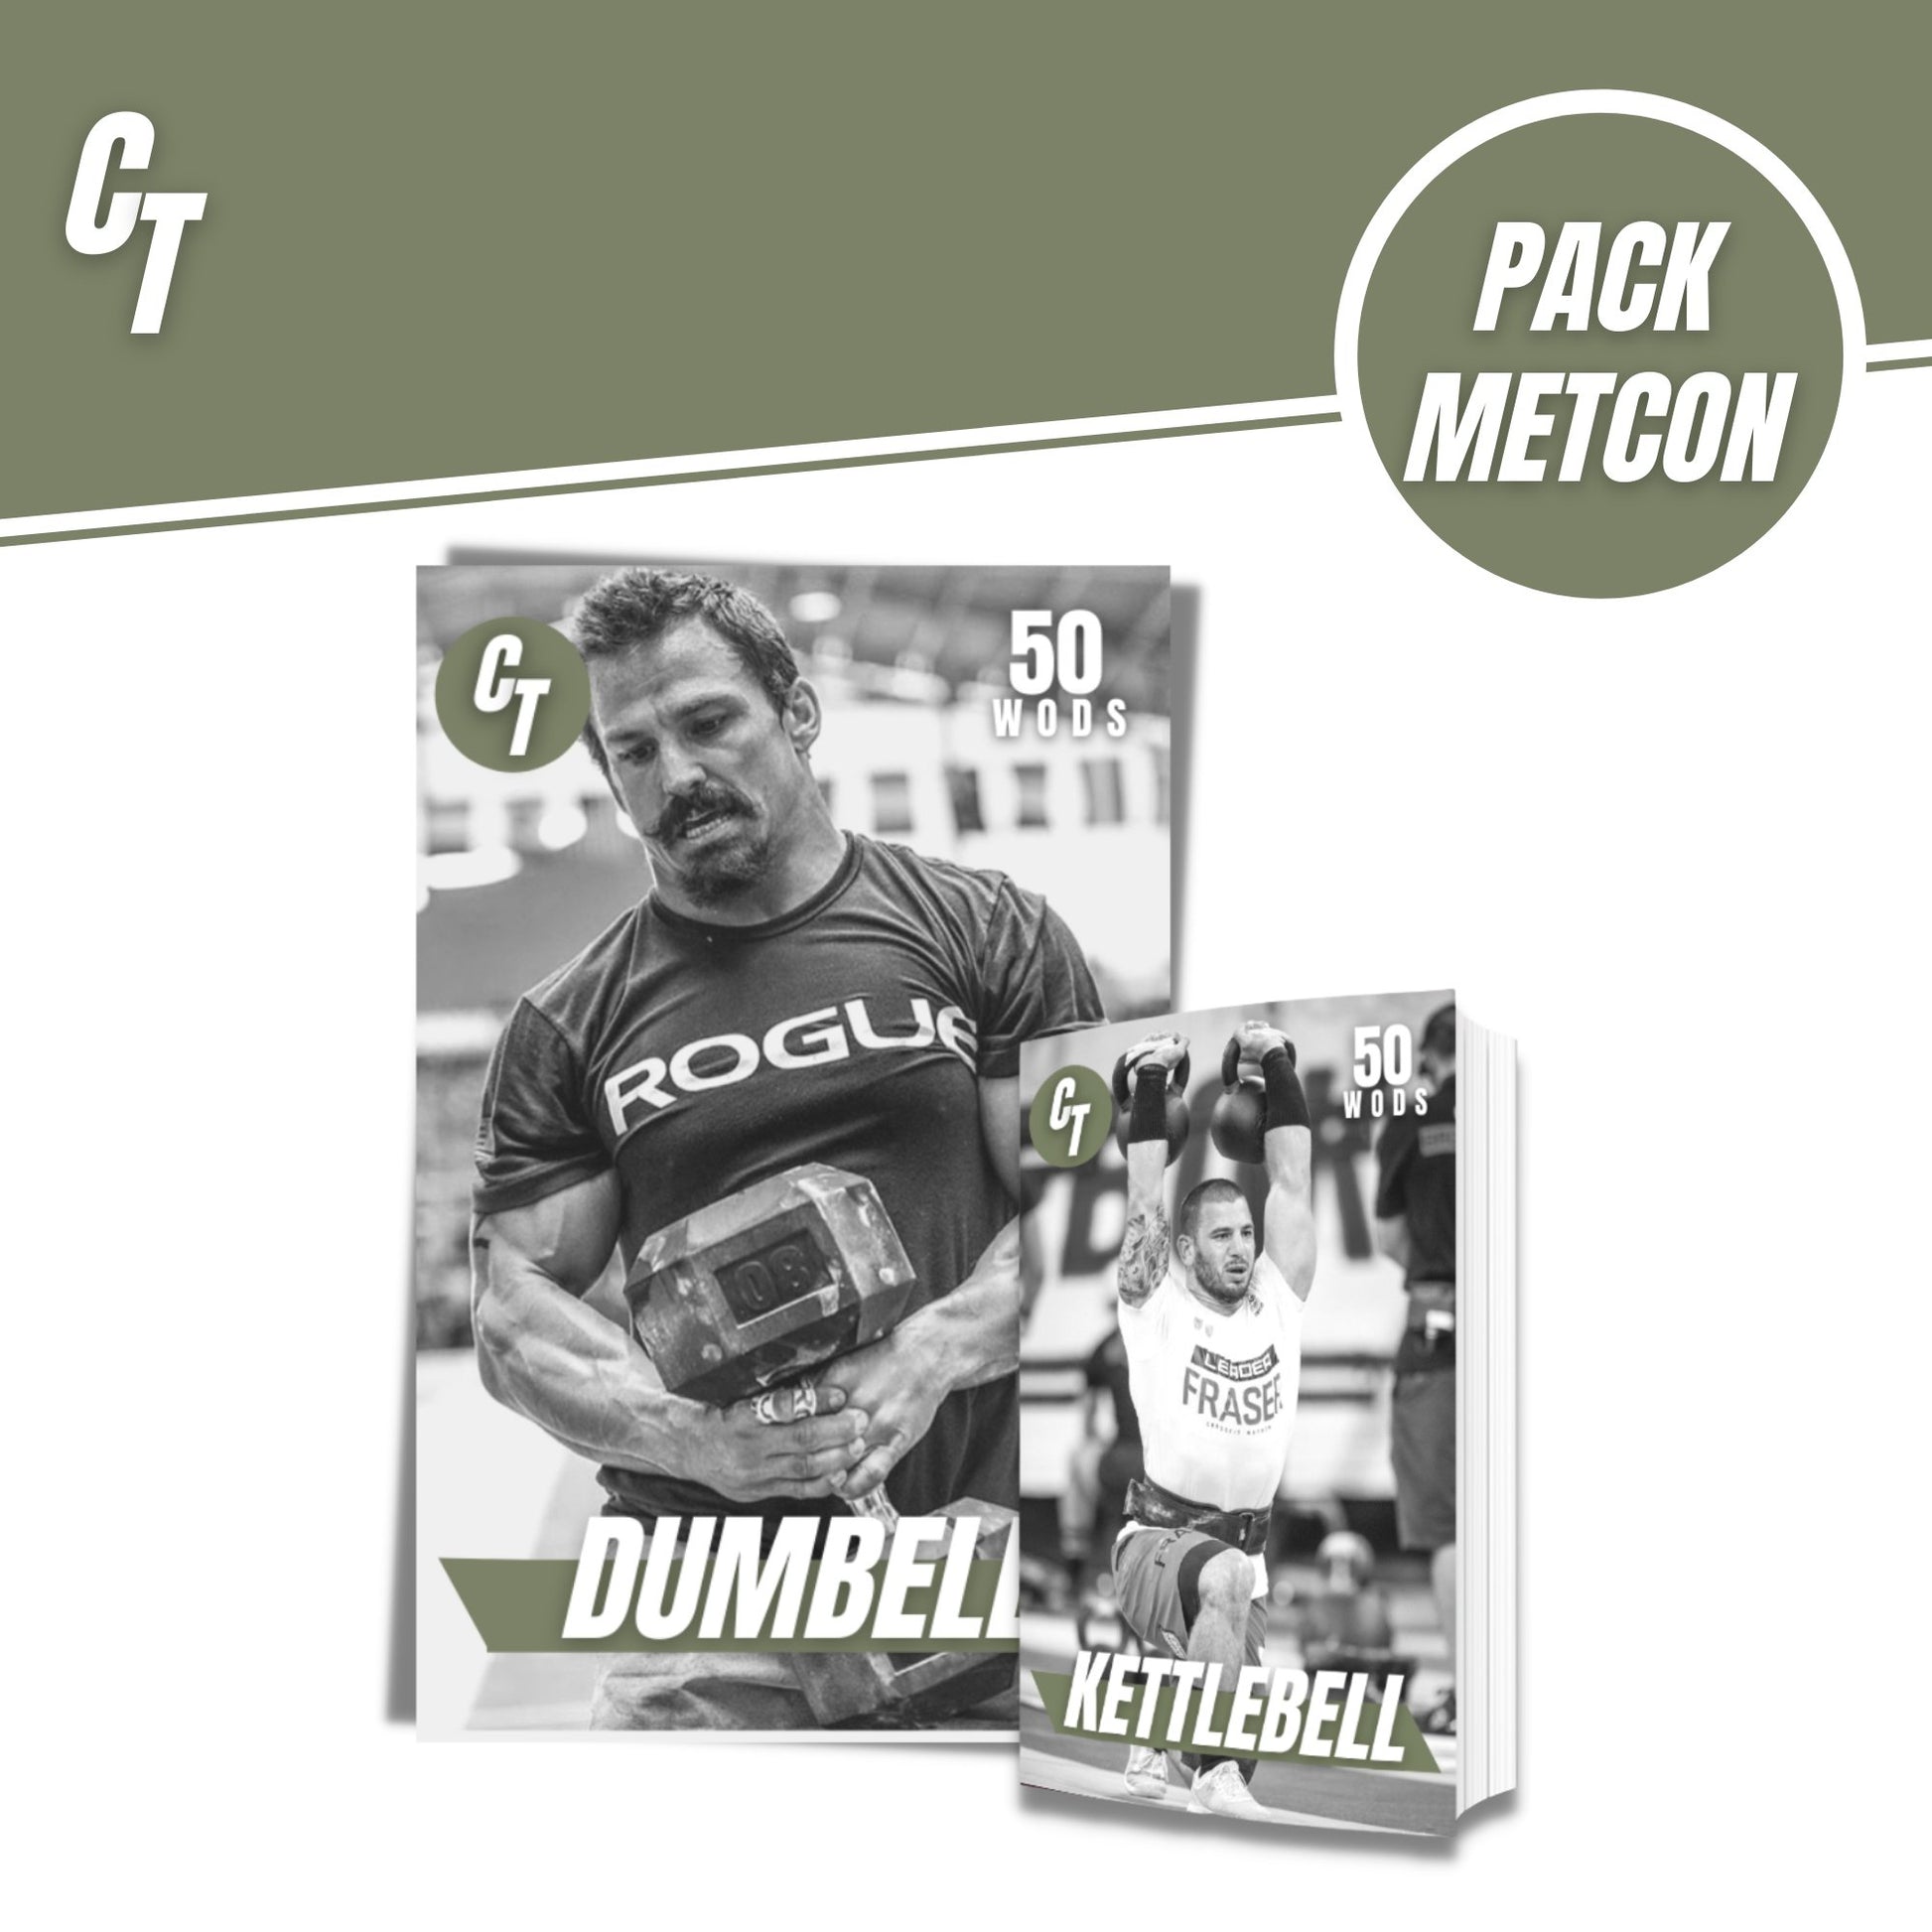 Pack METCON ™️ - Charlie Tango Fitness